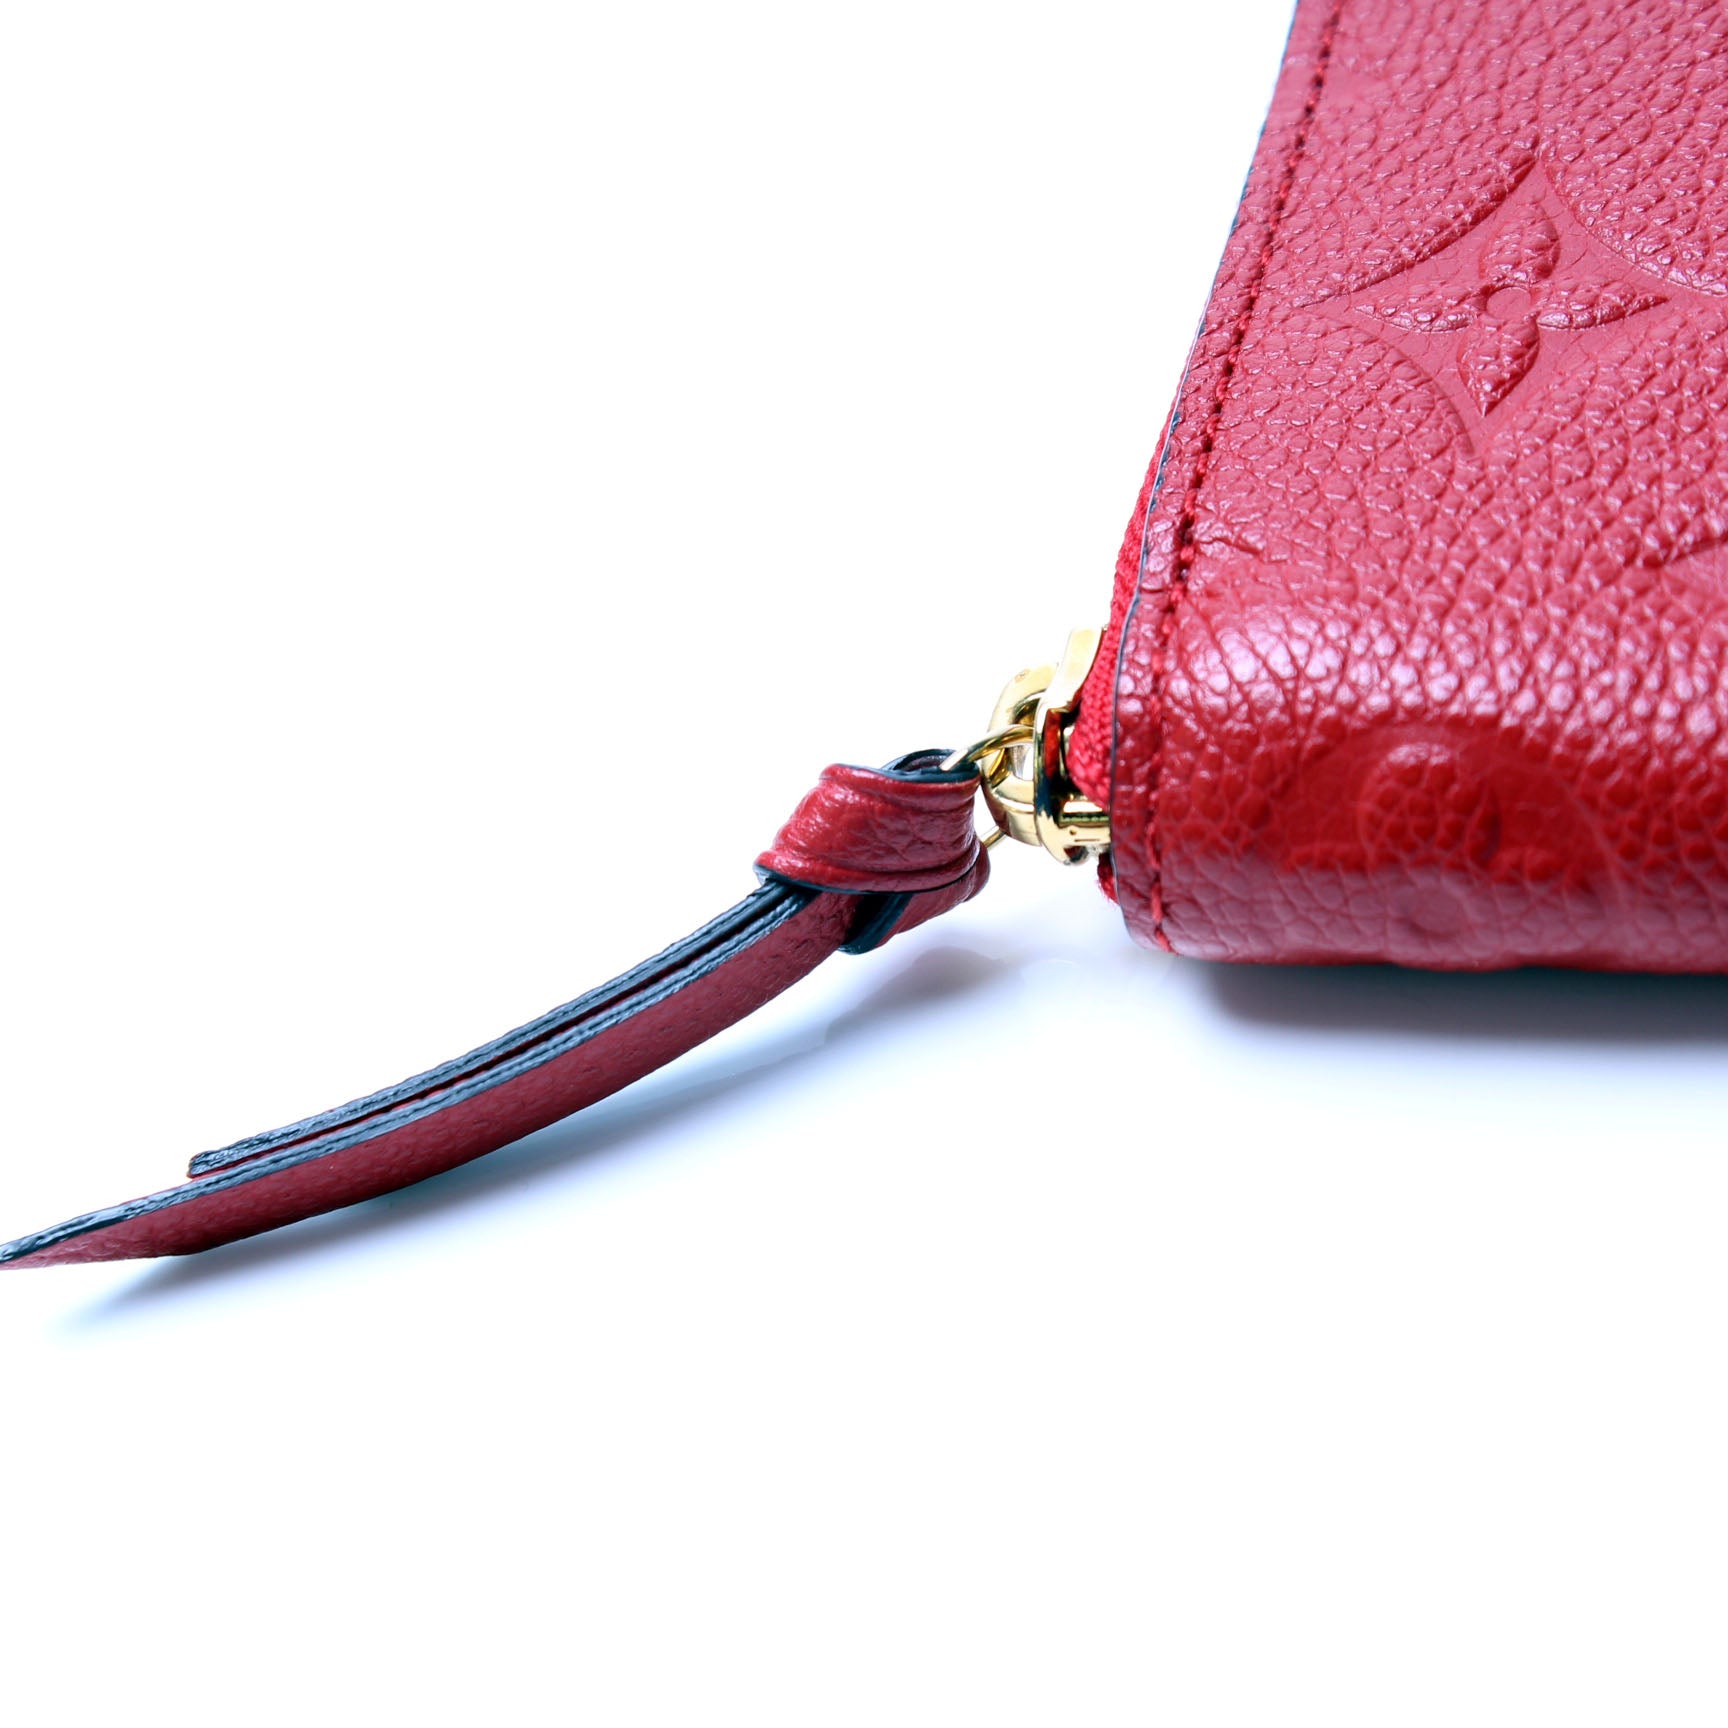 Clemence Wallet Bicolor Empreinte – Keeks Designer Handbags